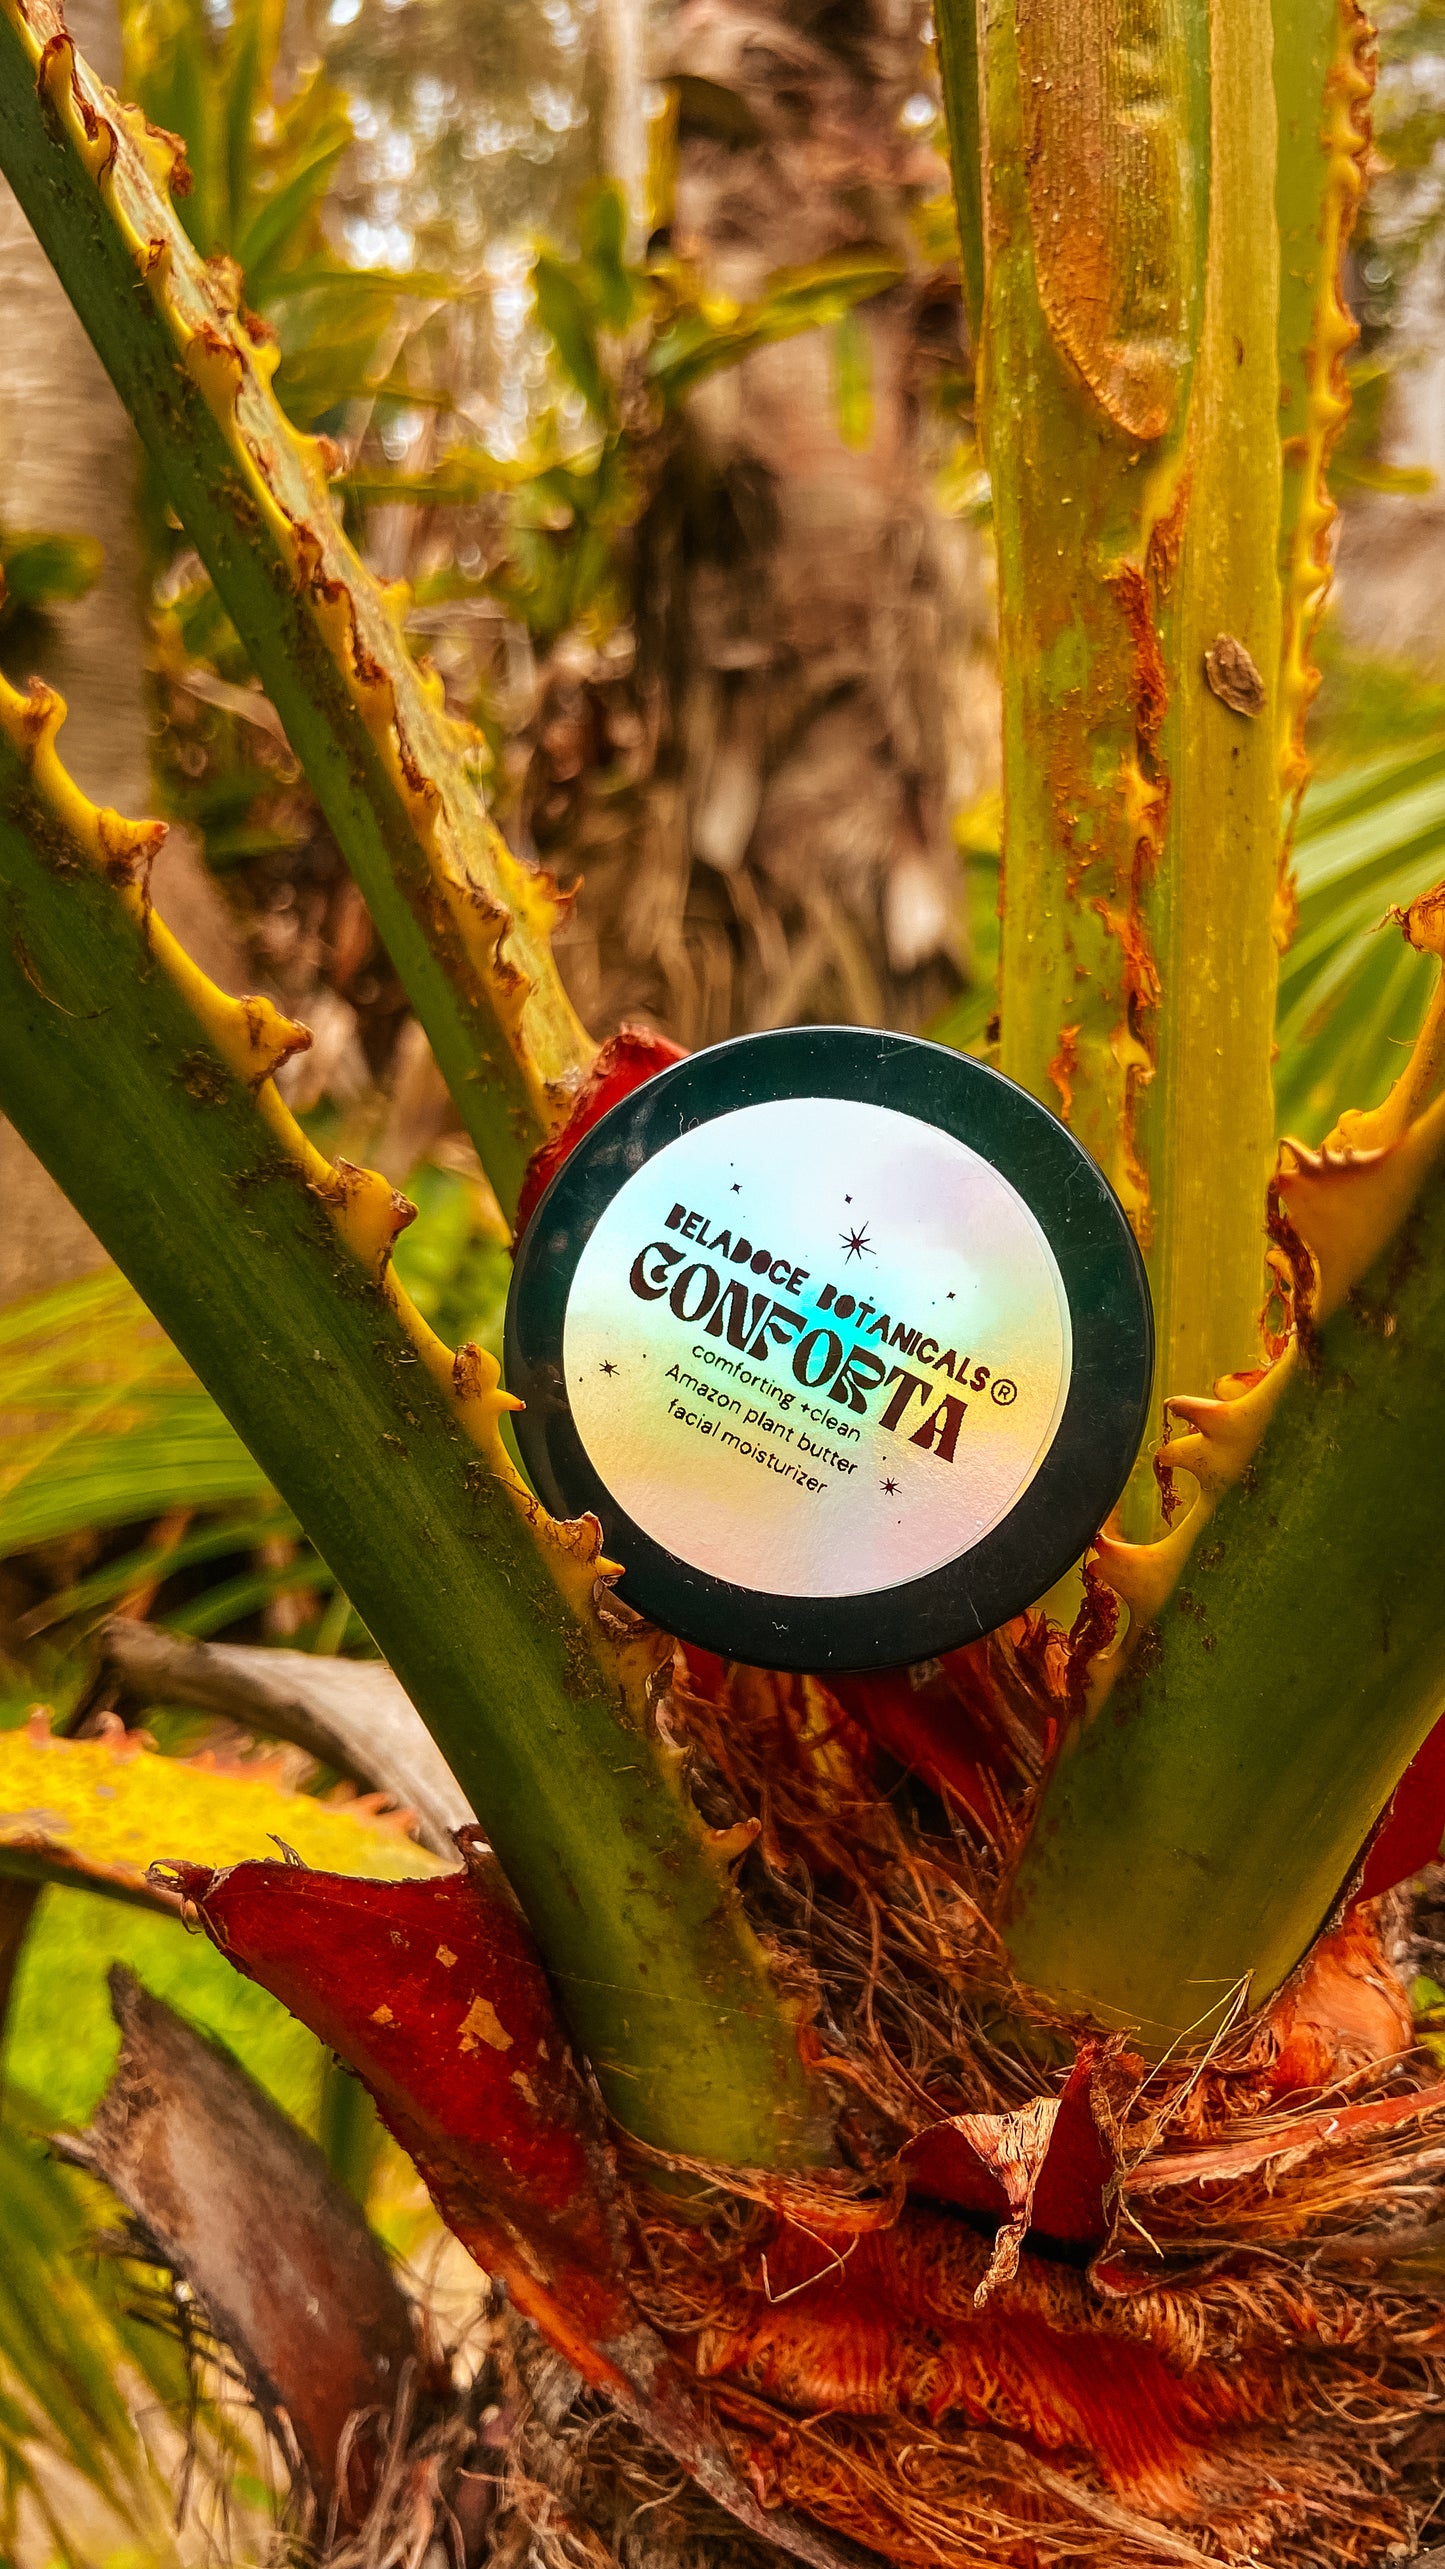 Conforta Amazon Plant Face Butter